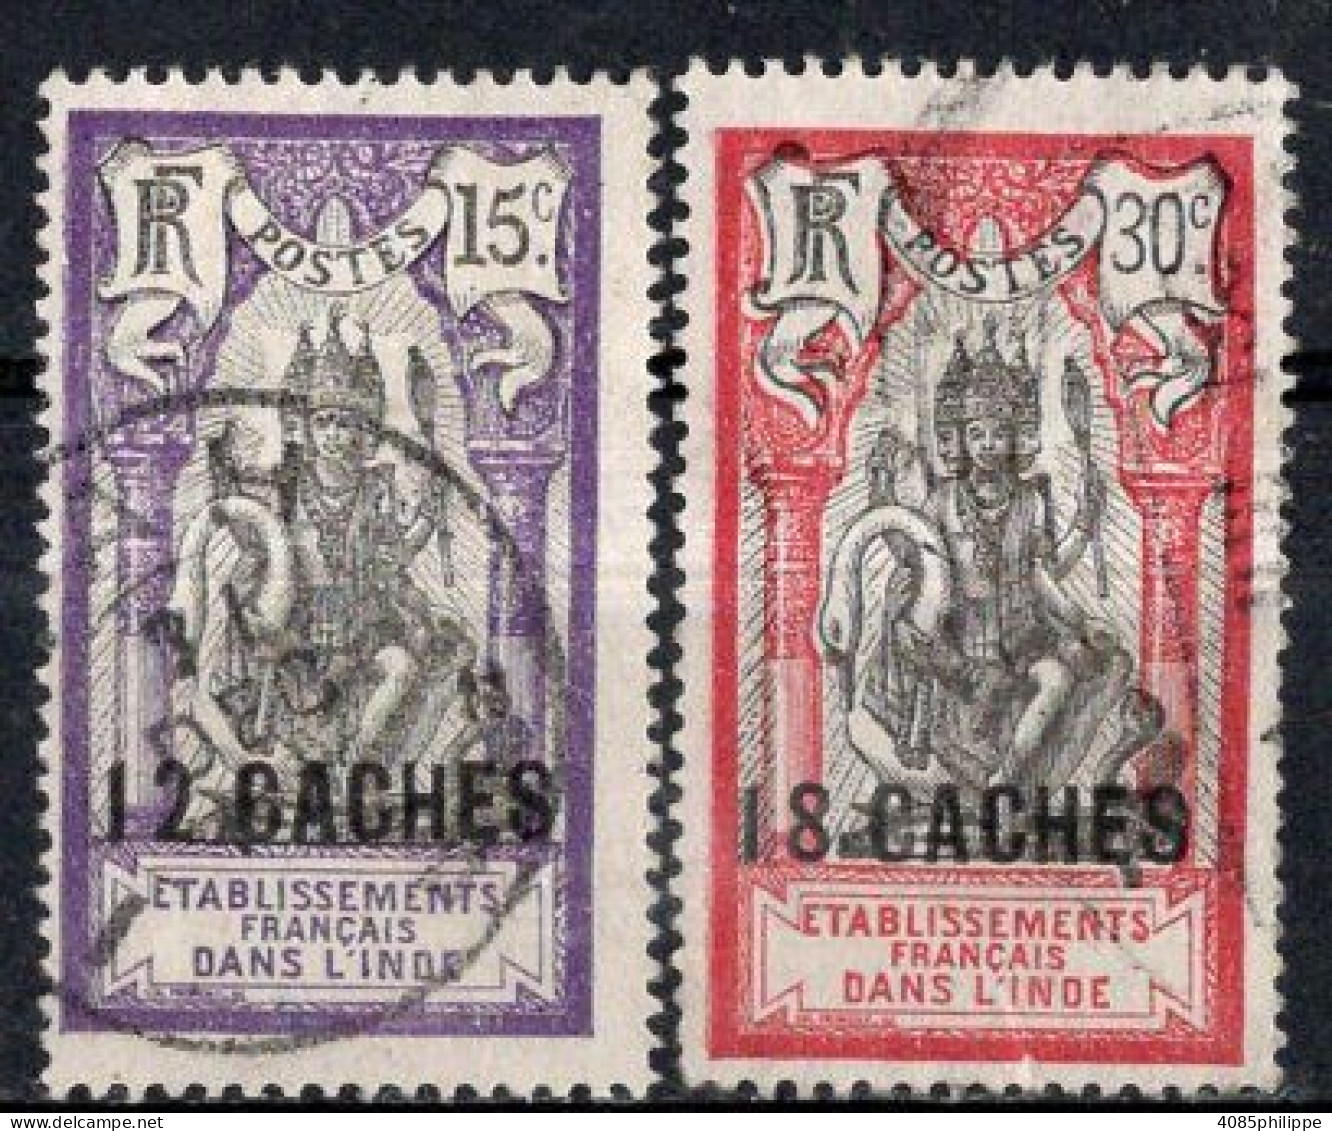 INDE Timbres-poste N°65 & 67 Oblitérés TB Cote : 4€25 - Used Stamps